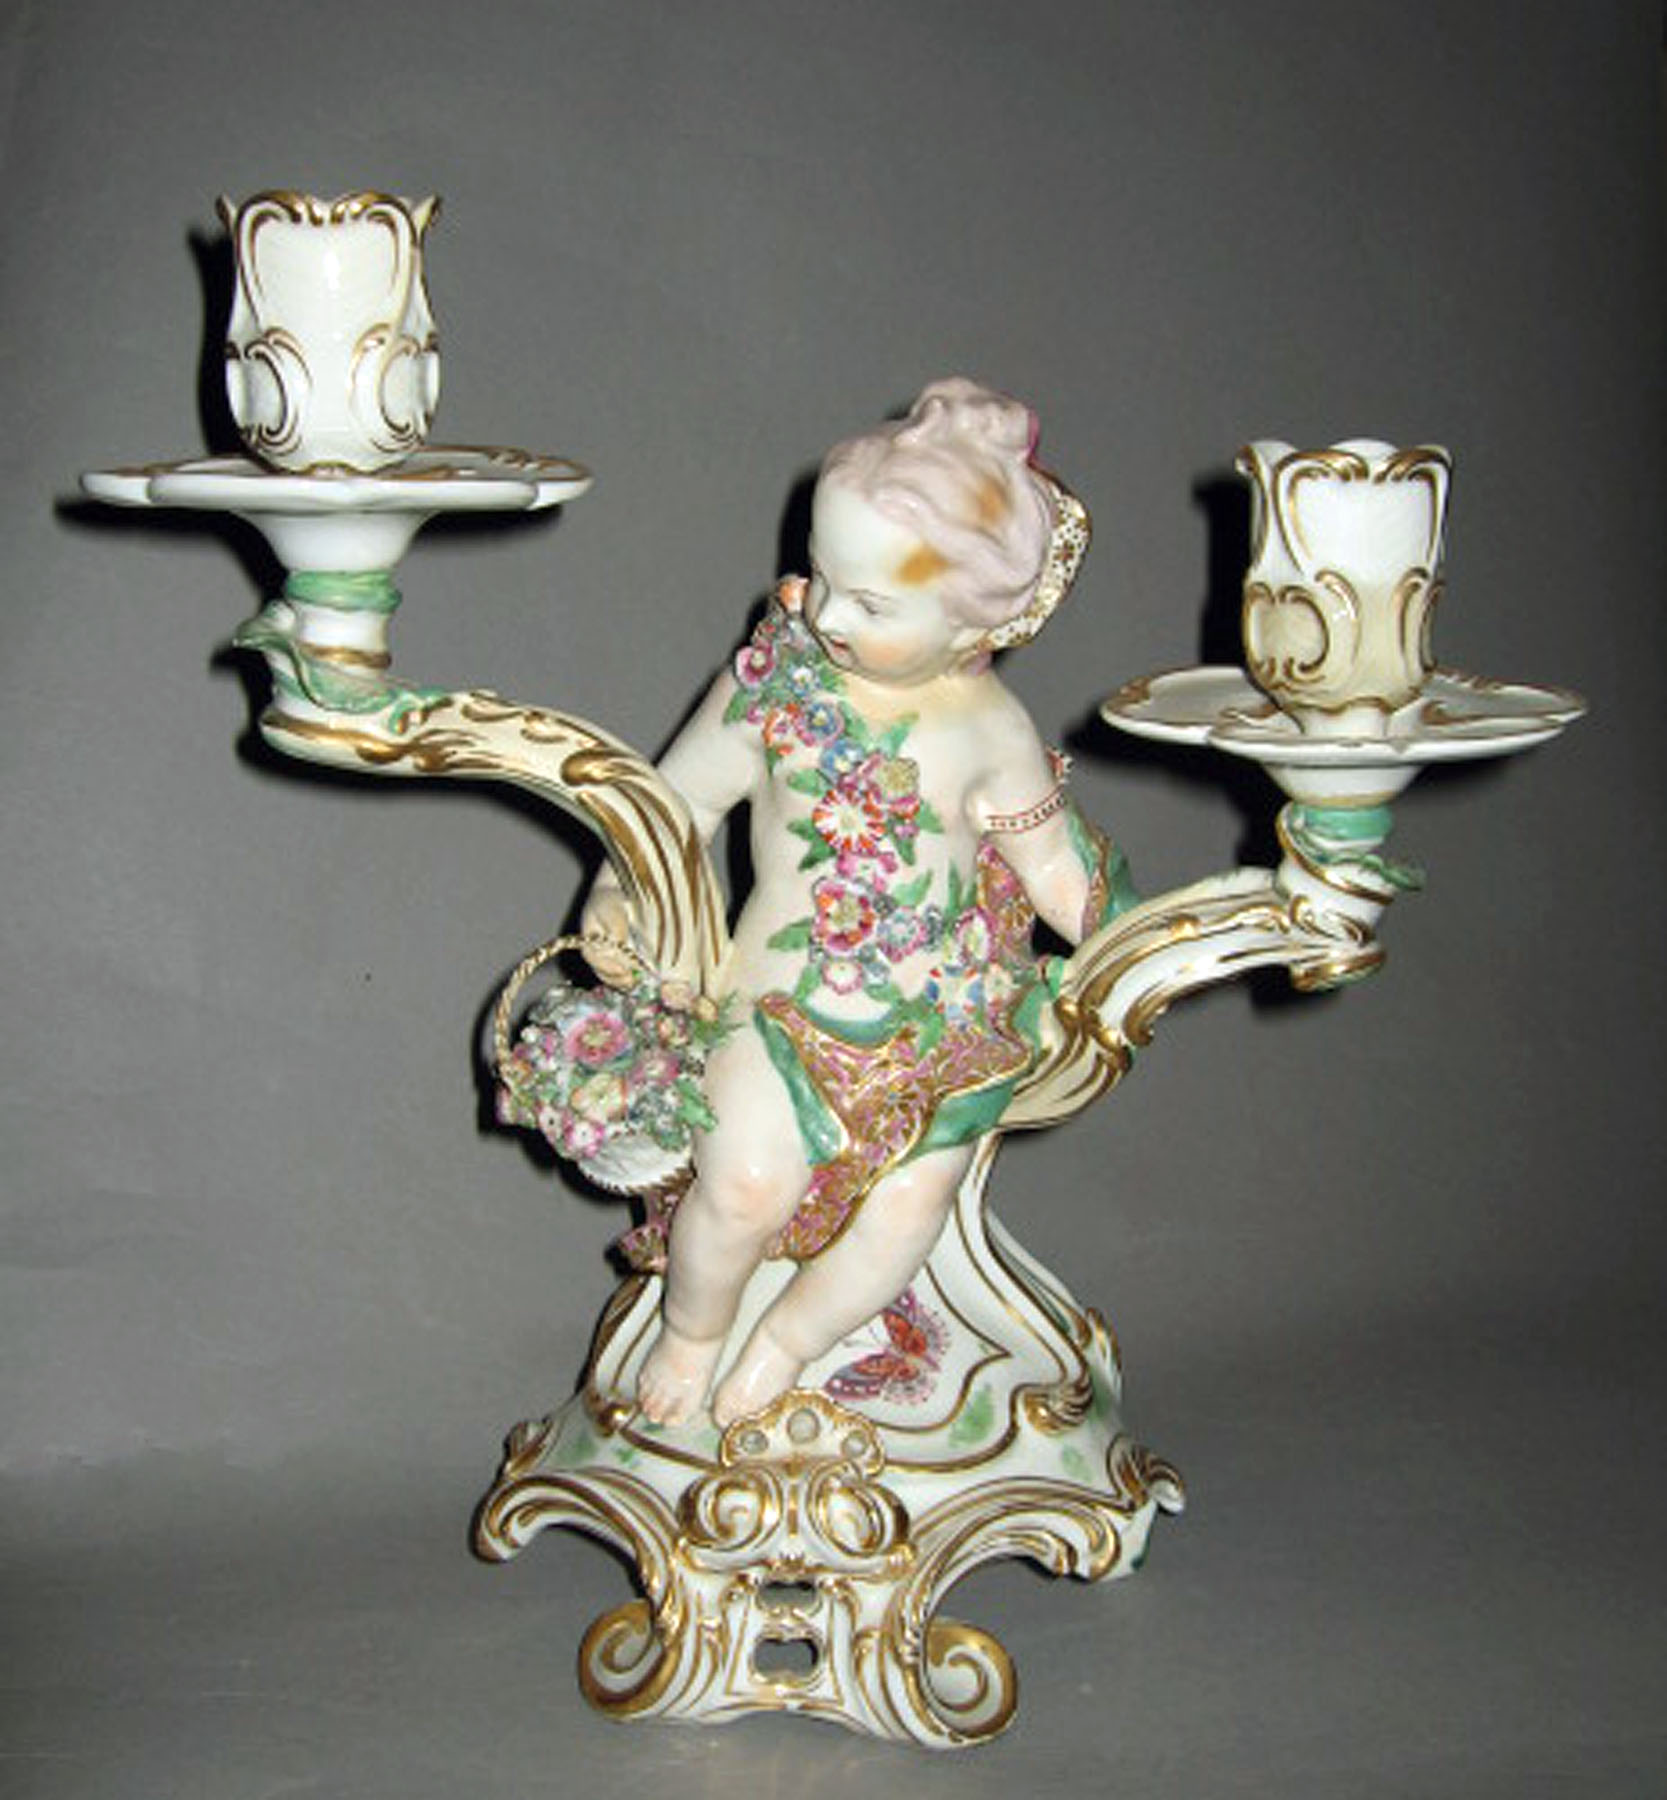 1963.0922 Porcelain candlestick figure